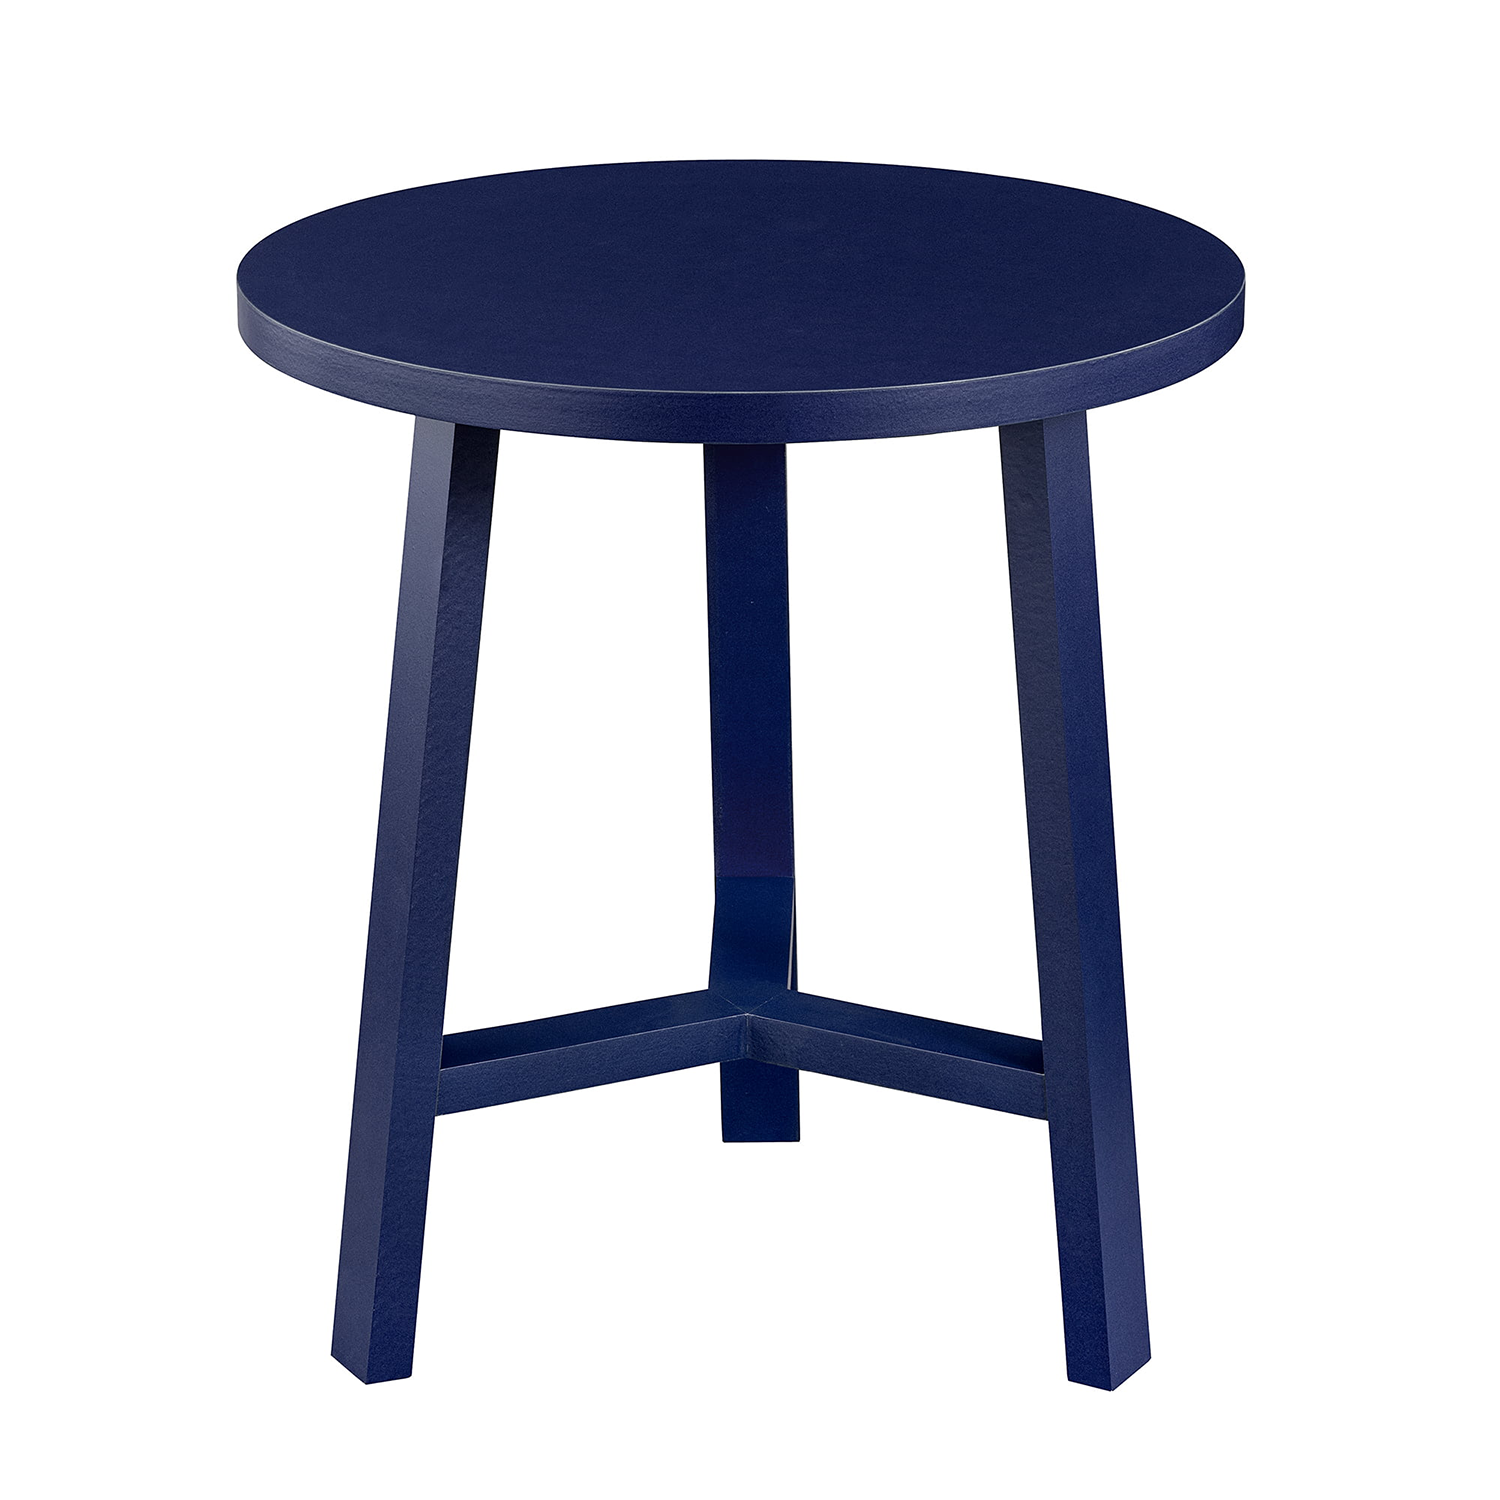 Mid-Century Modern Simple 3-Leg Round Side Table